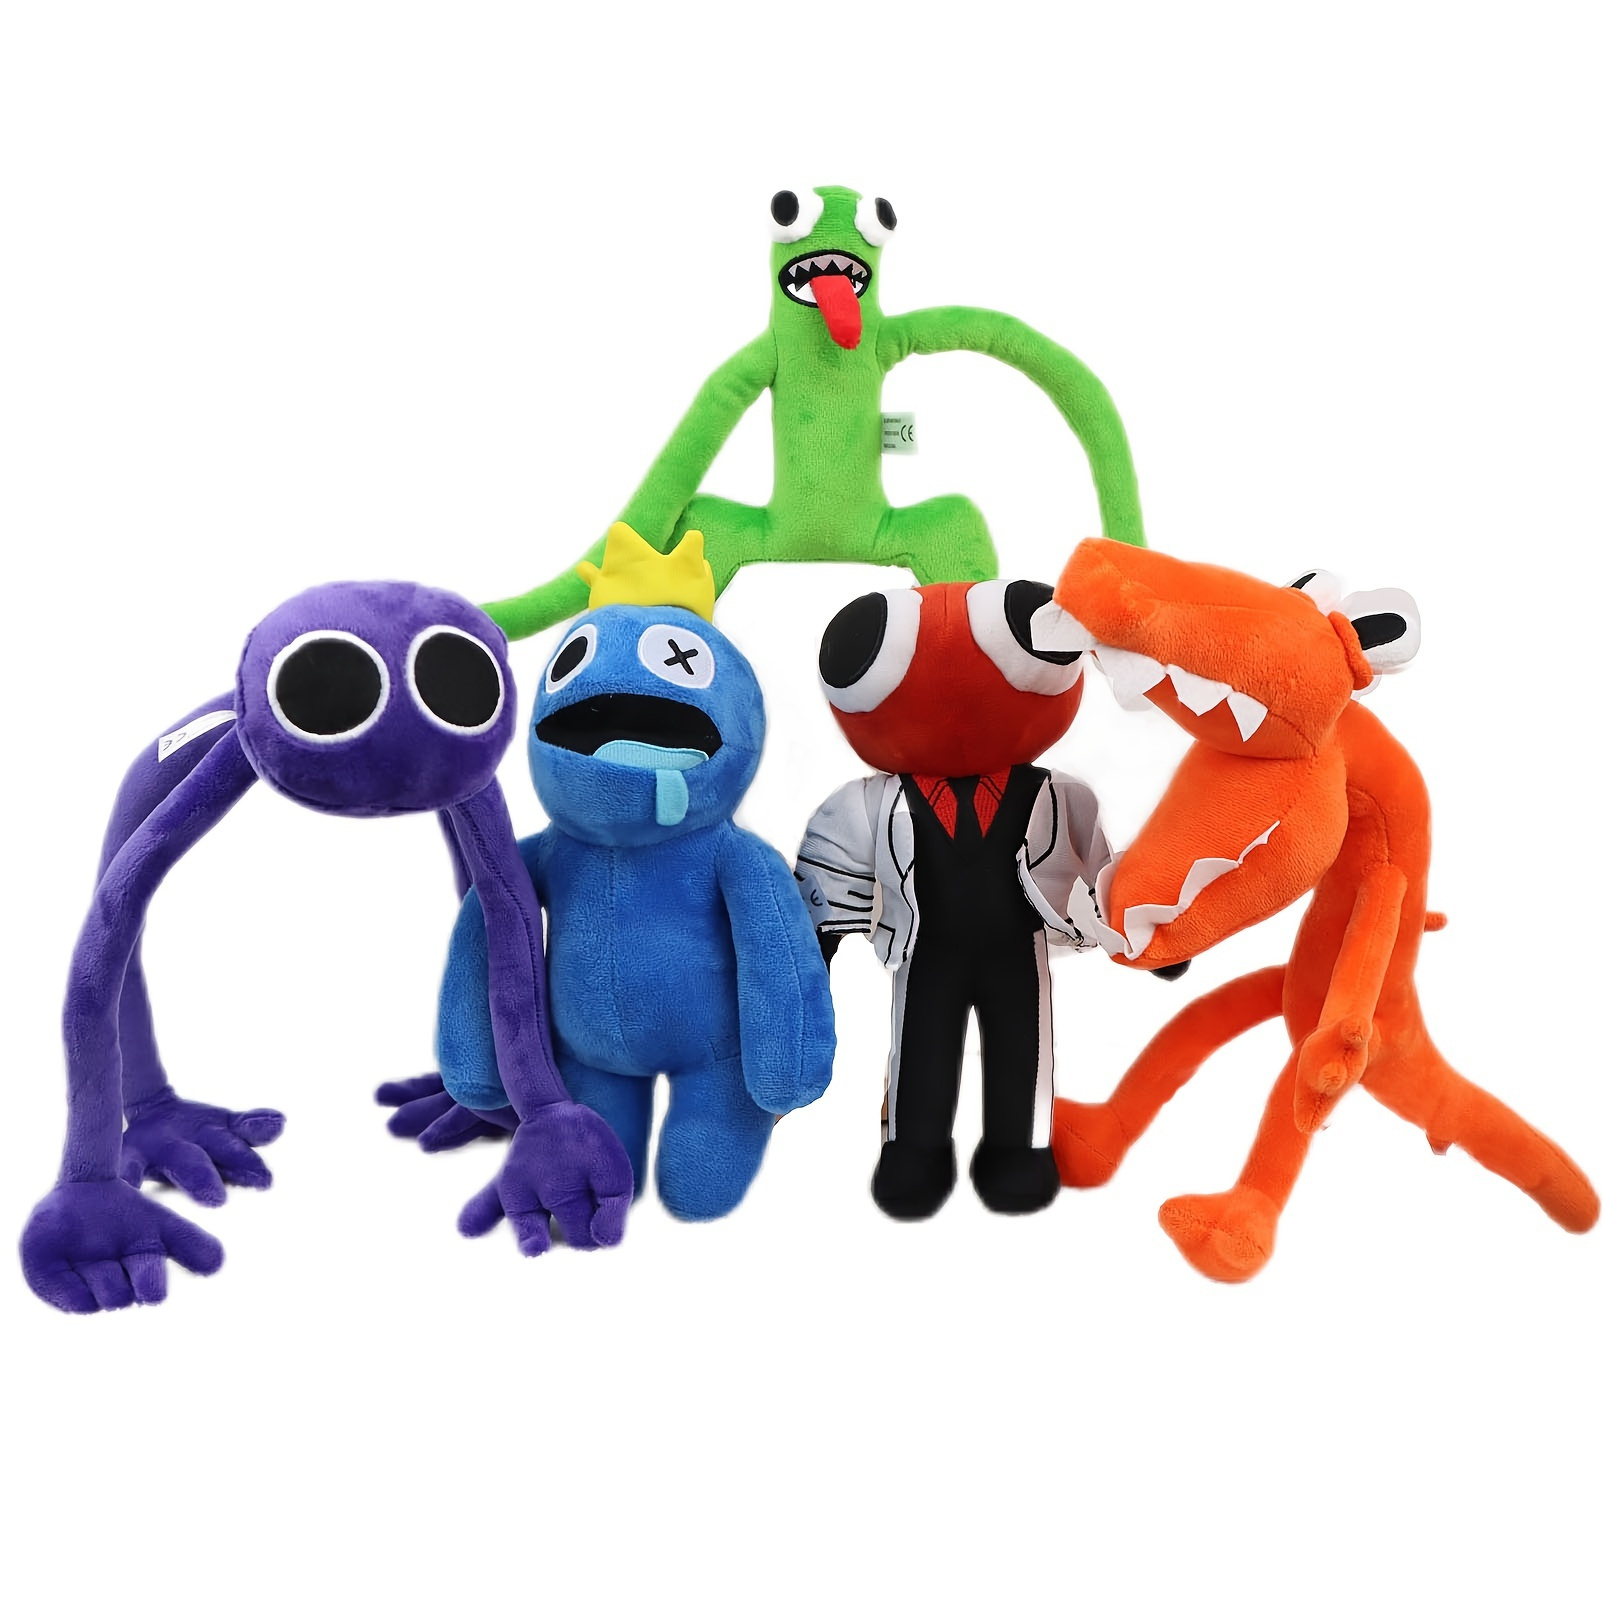 Rainbow Friends Plush Toy ，Doors Plush Set - 2022 New Monster